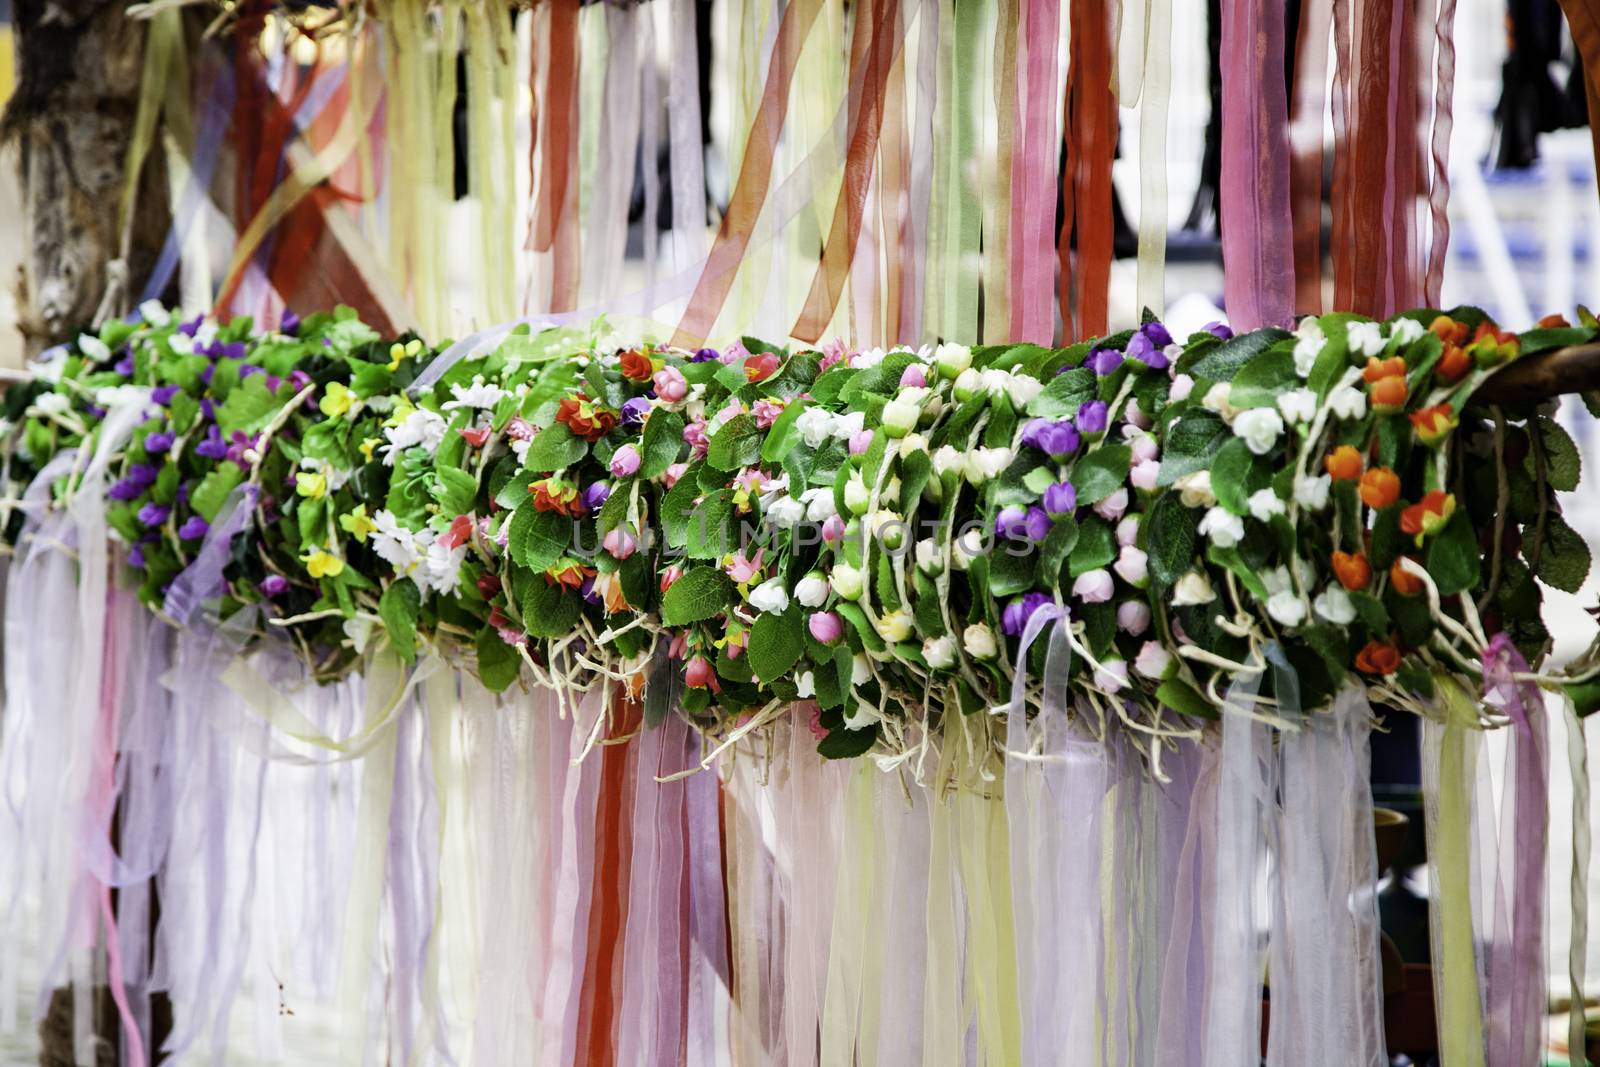 Wreaths of flowers craft by esebene